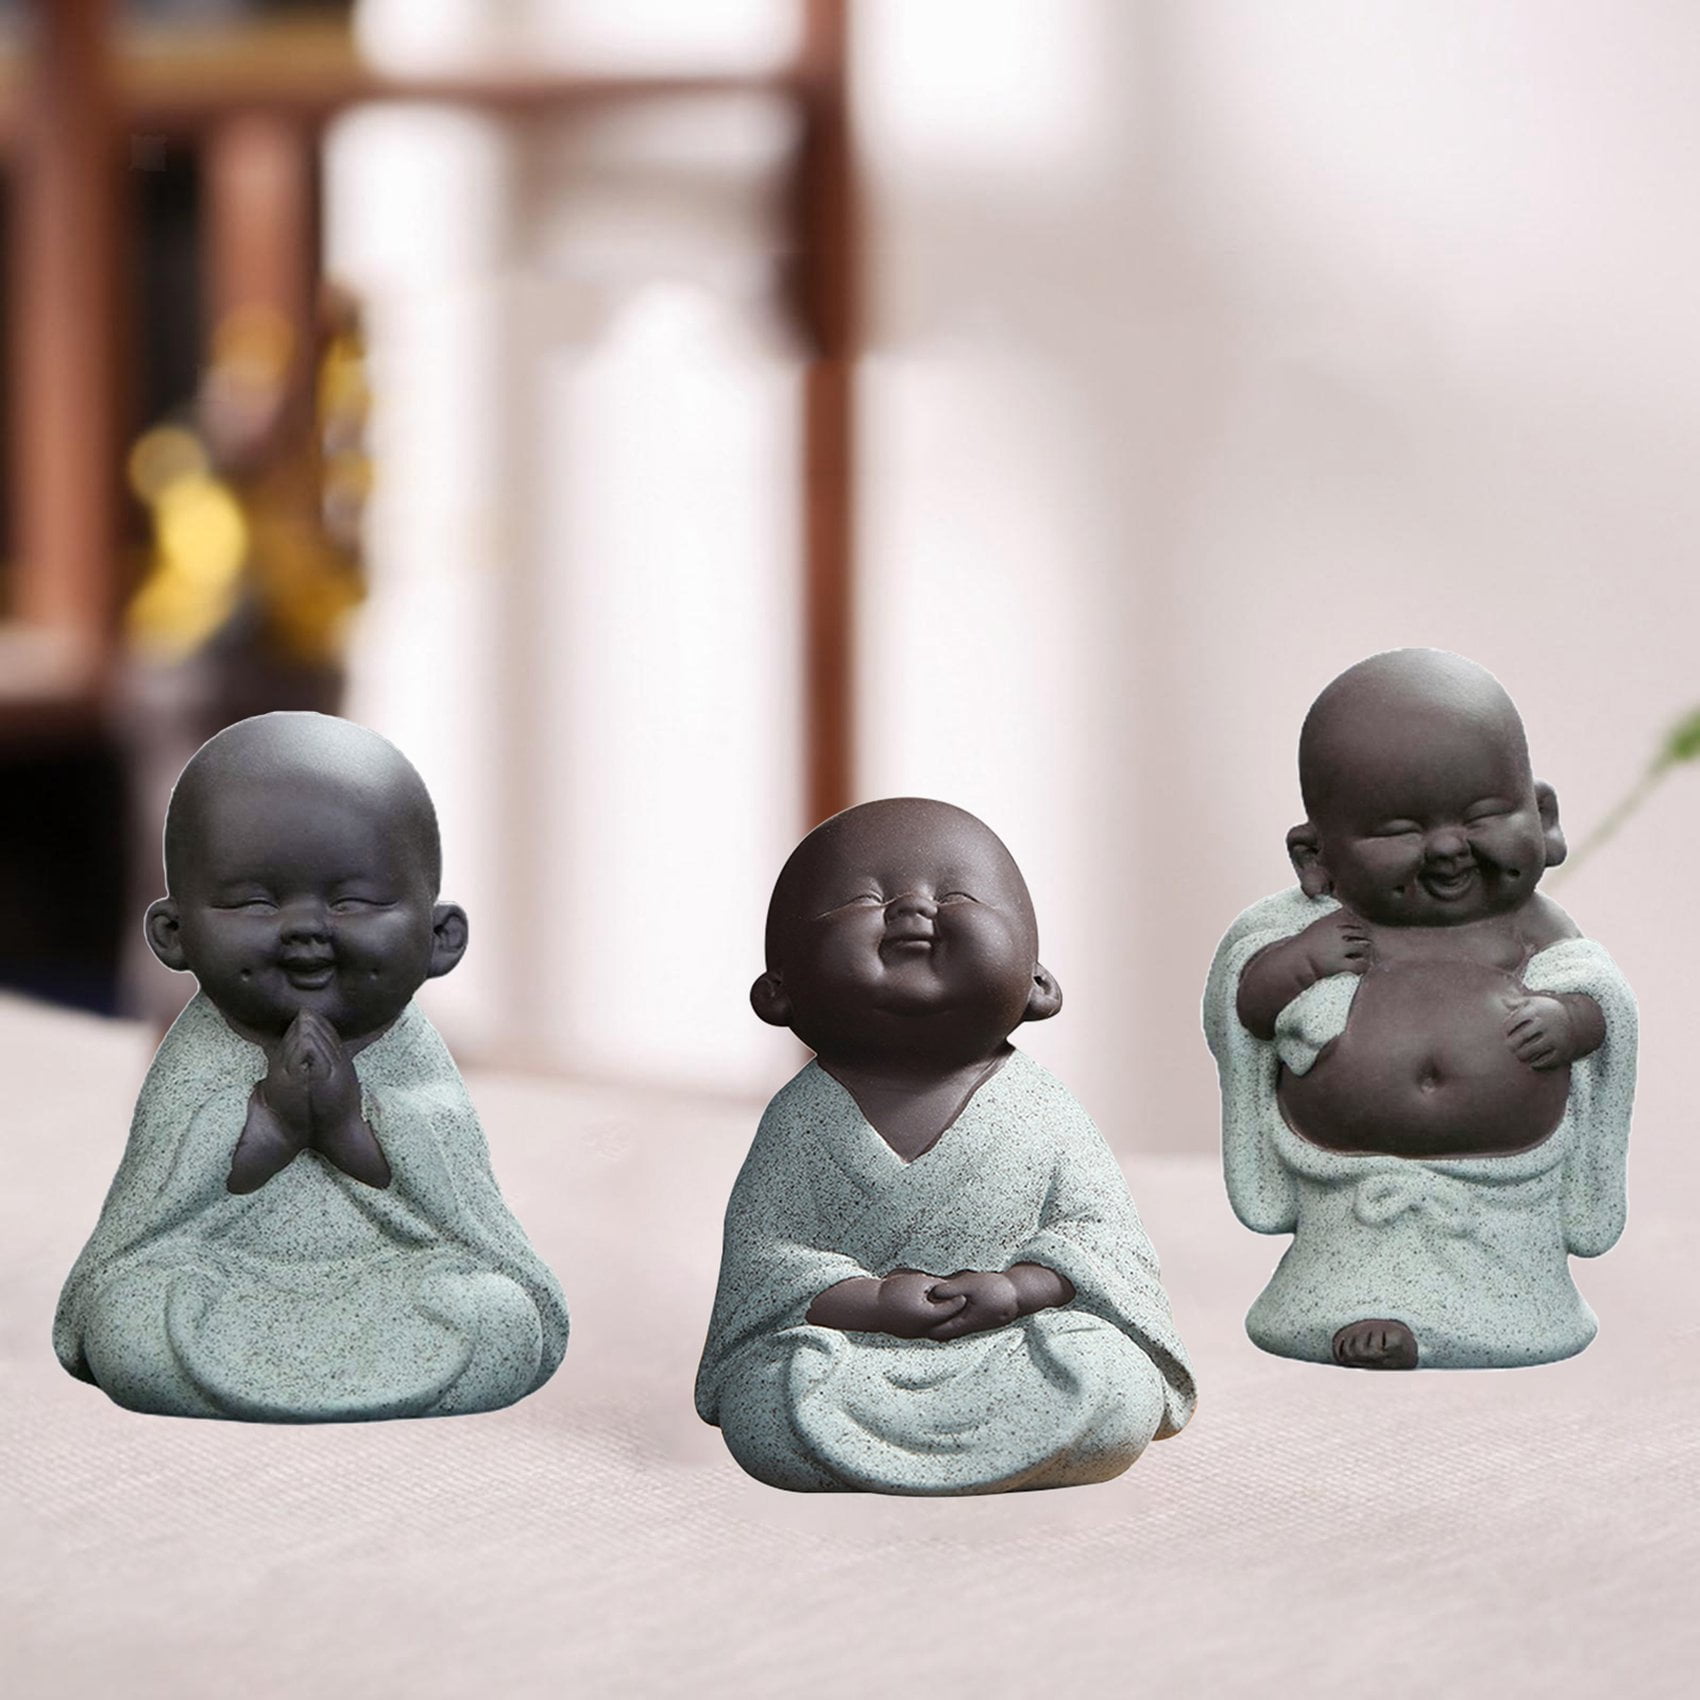 Ceramic Little Cute Baby Buddha C Baby Buddha Statue Creative Crafts Figurines Decor Ornaments Home Dolls Figurine